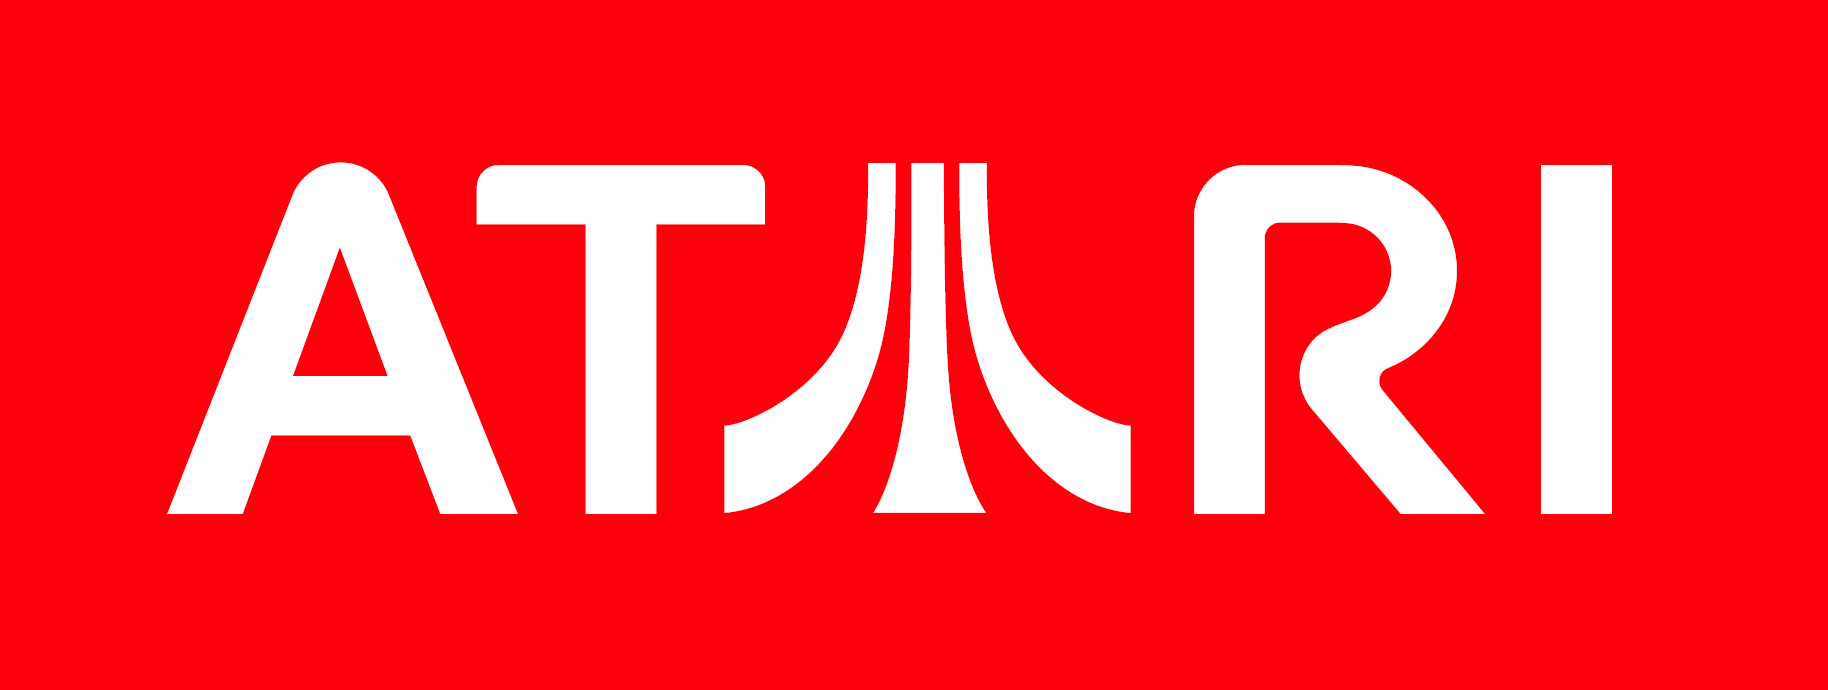 Atari U.S. Files Chapter 11 Bankruptcy, Seeks Buyers